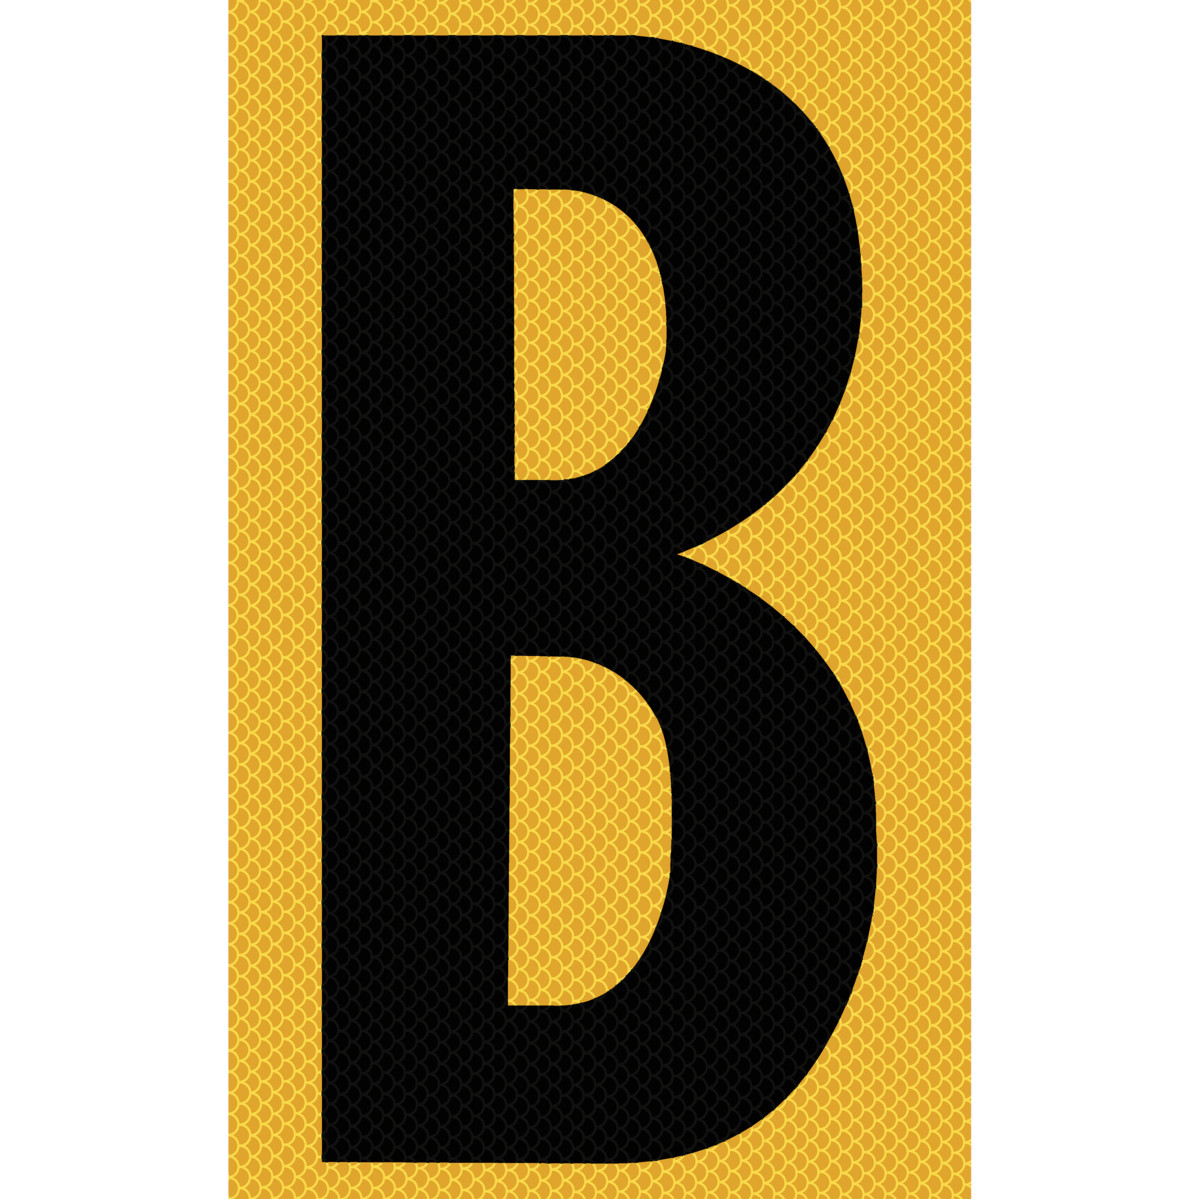 3" Black on Yellow High Intensity Reflective "B"